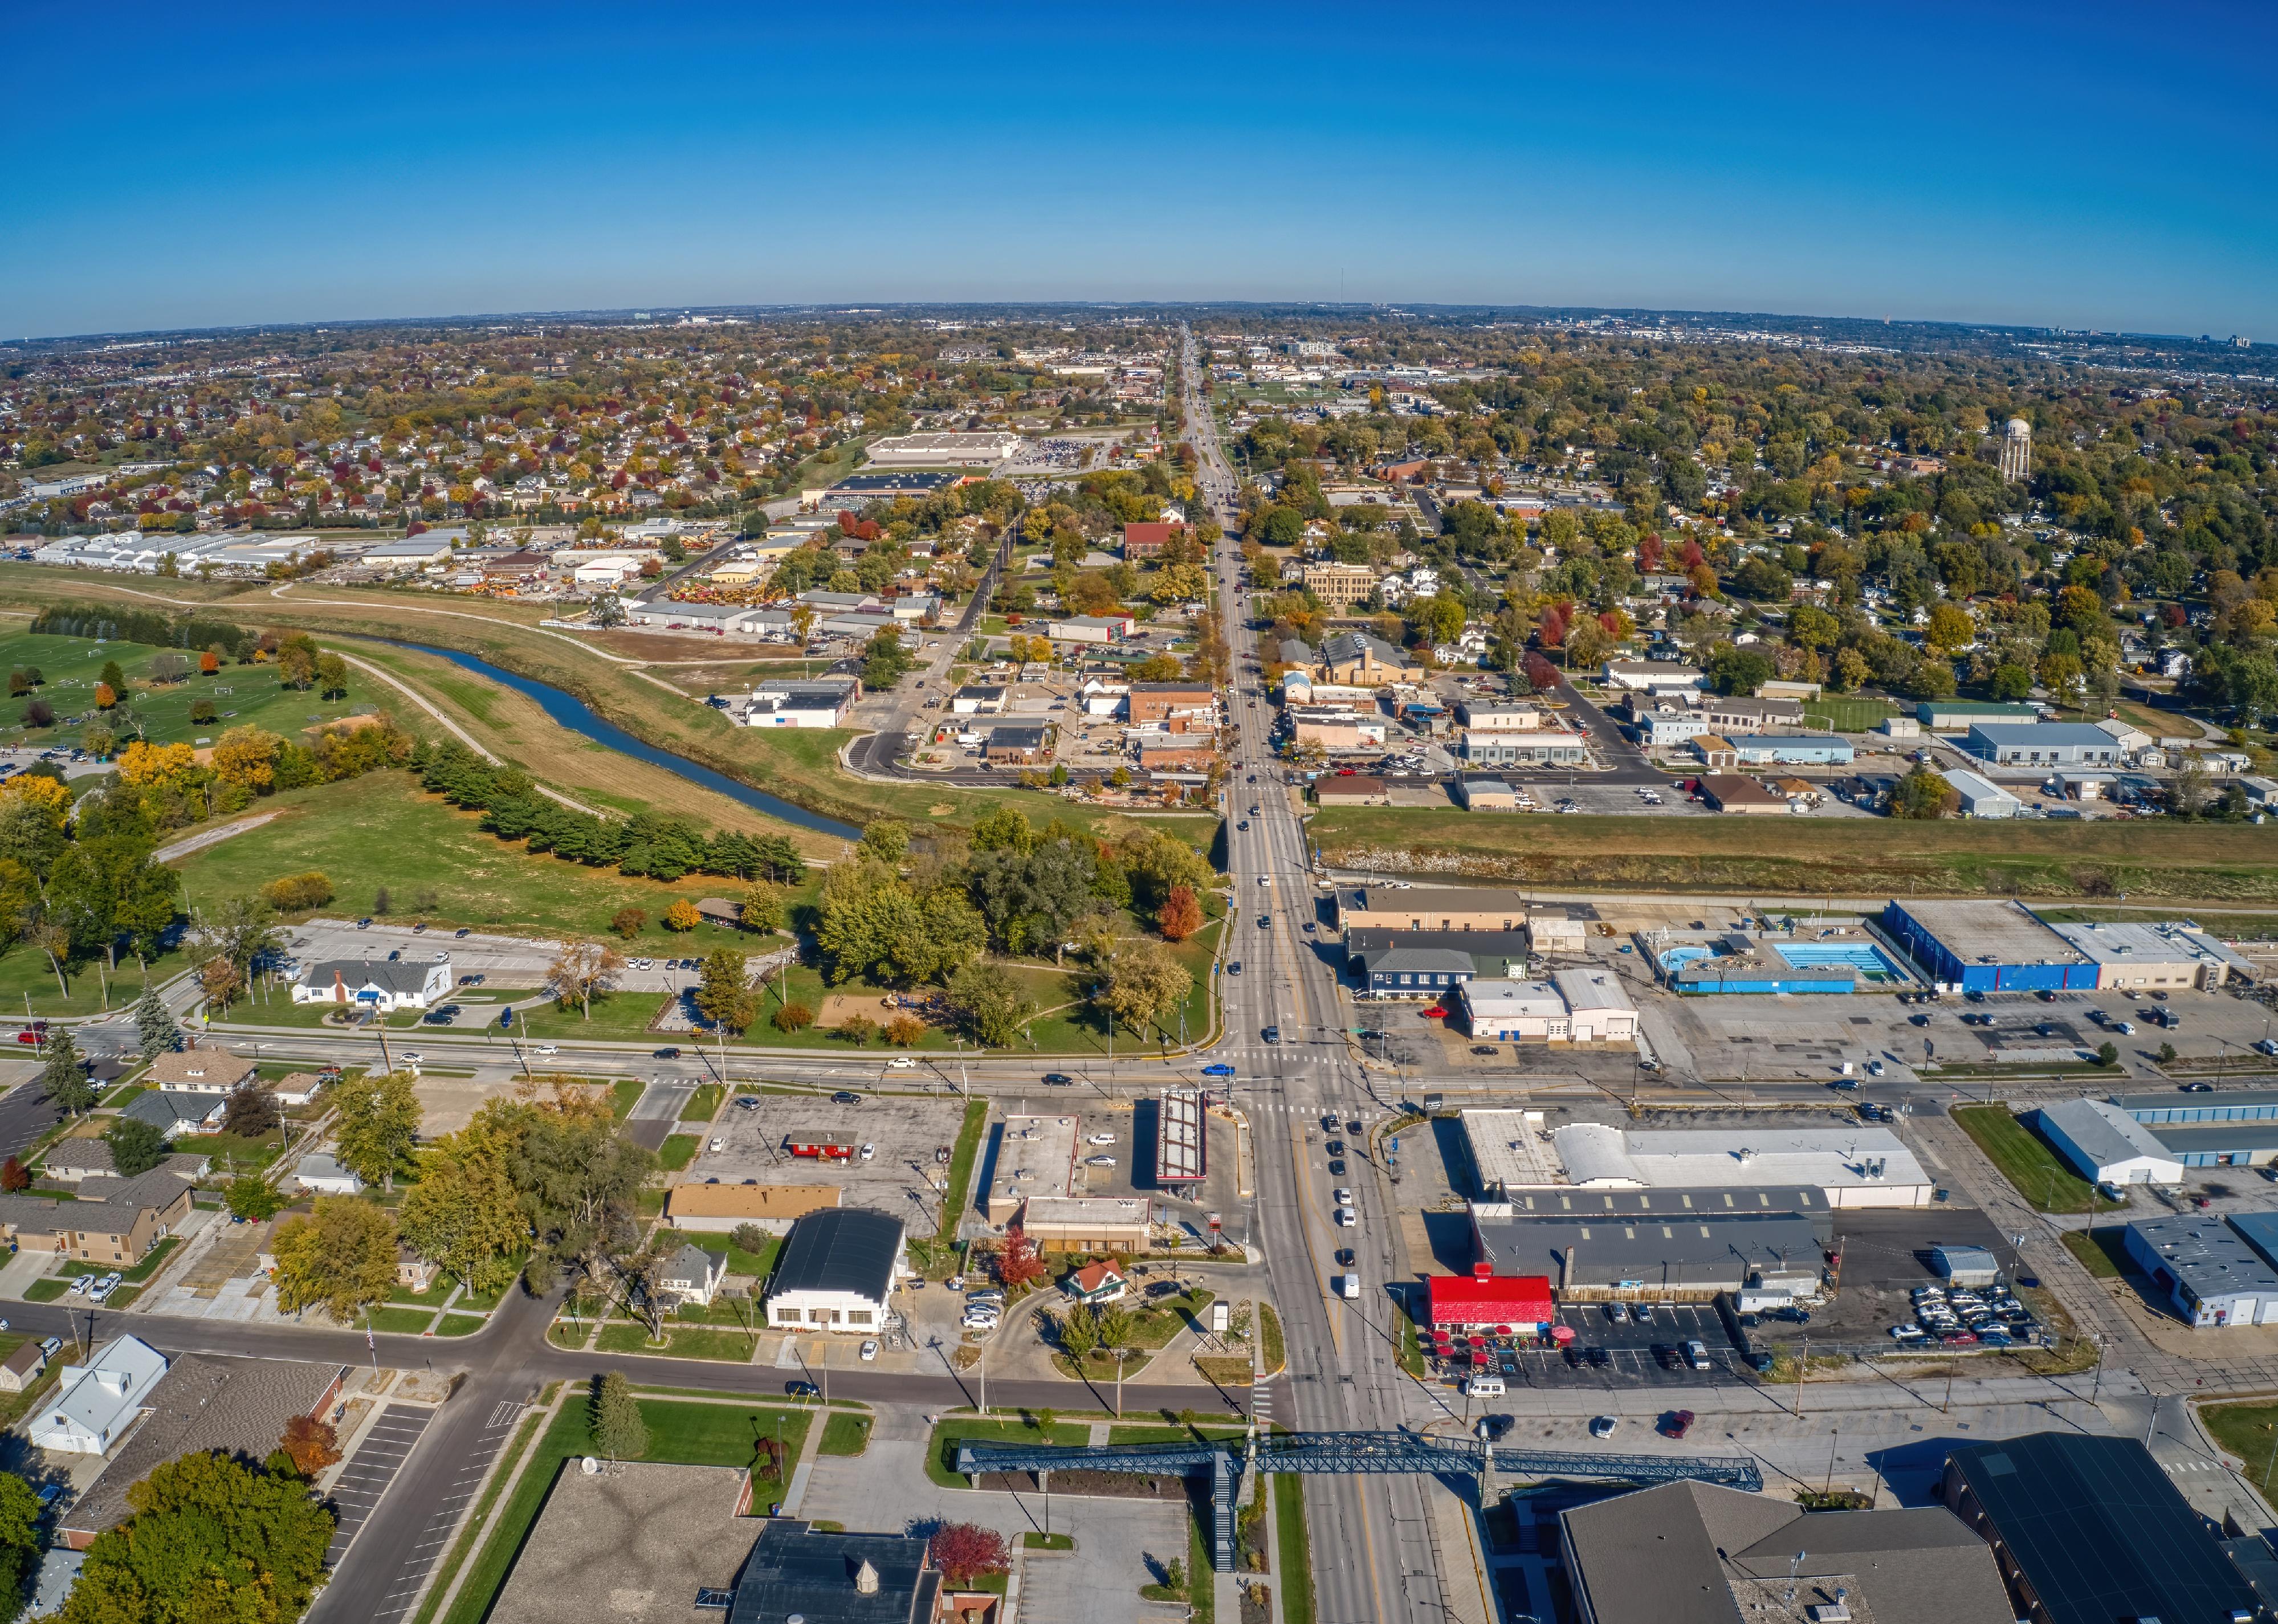 Aerial View of the Omaha suburb of Papillion, Nebraska.